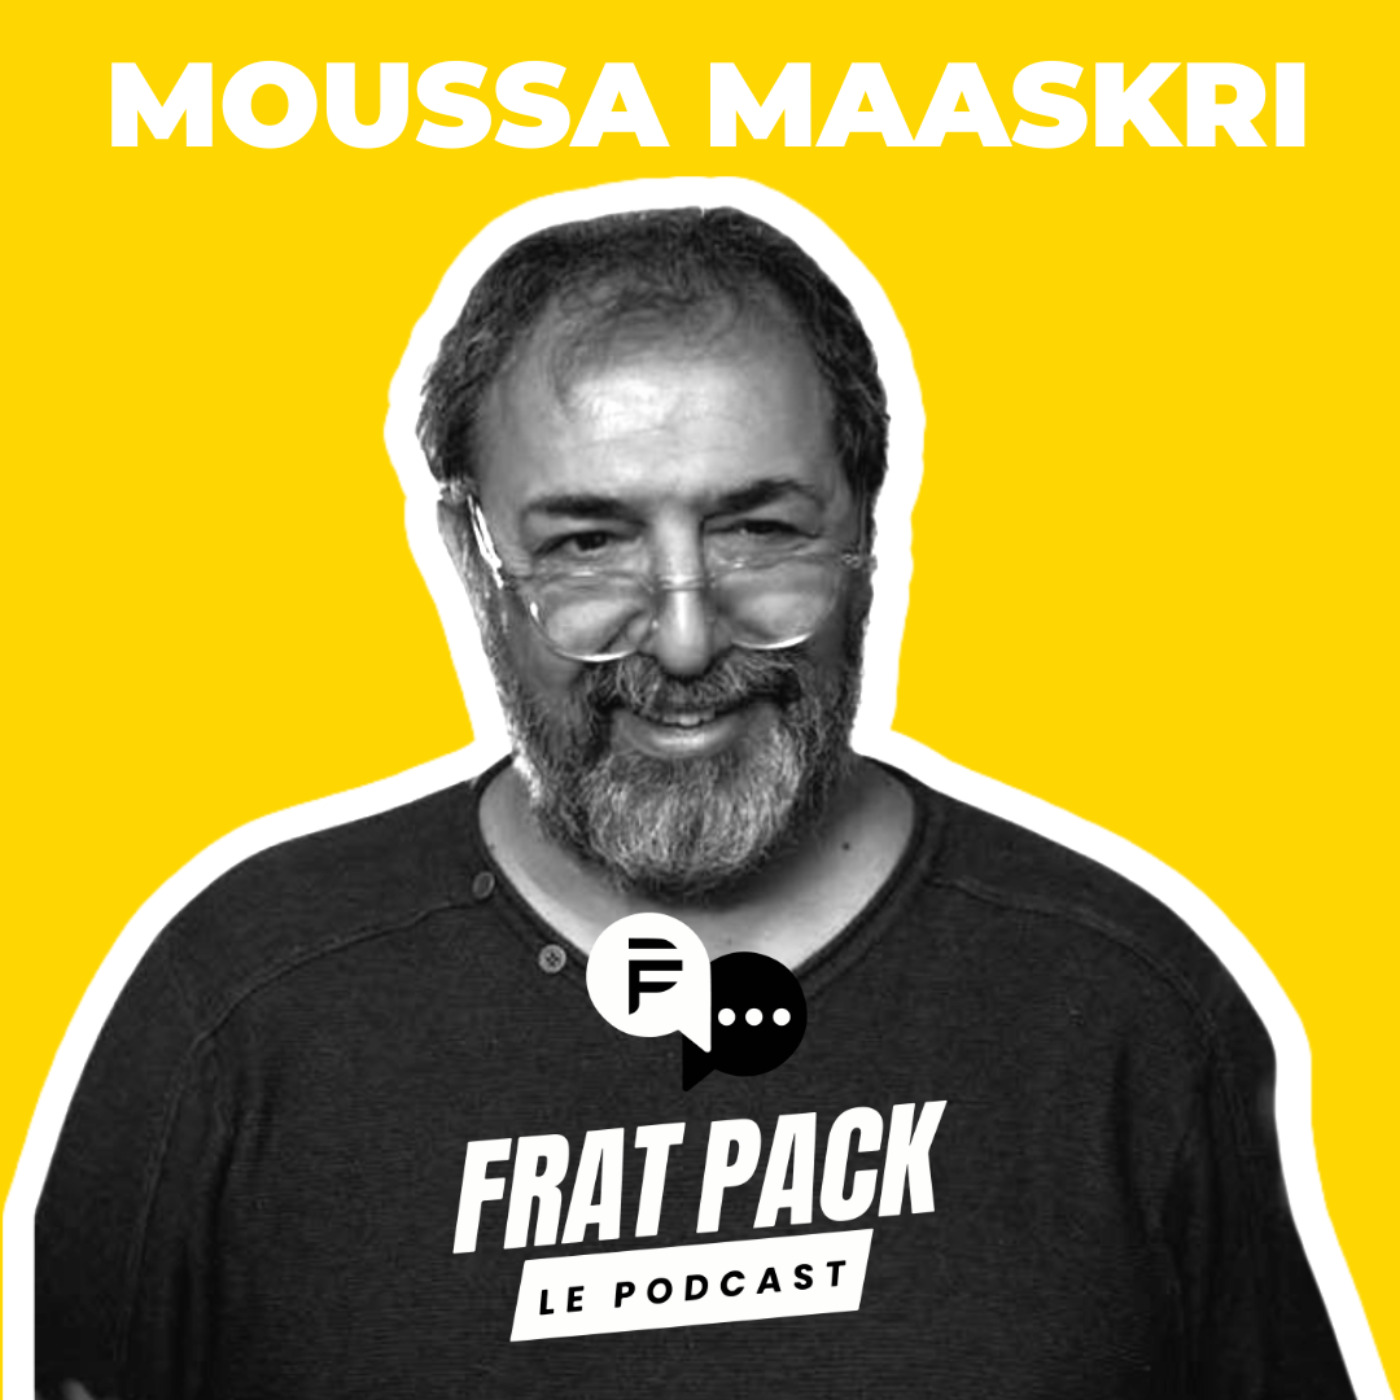 S02E06 Frat Pack avec Moussa Maaskri